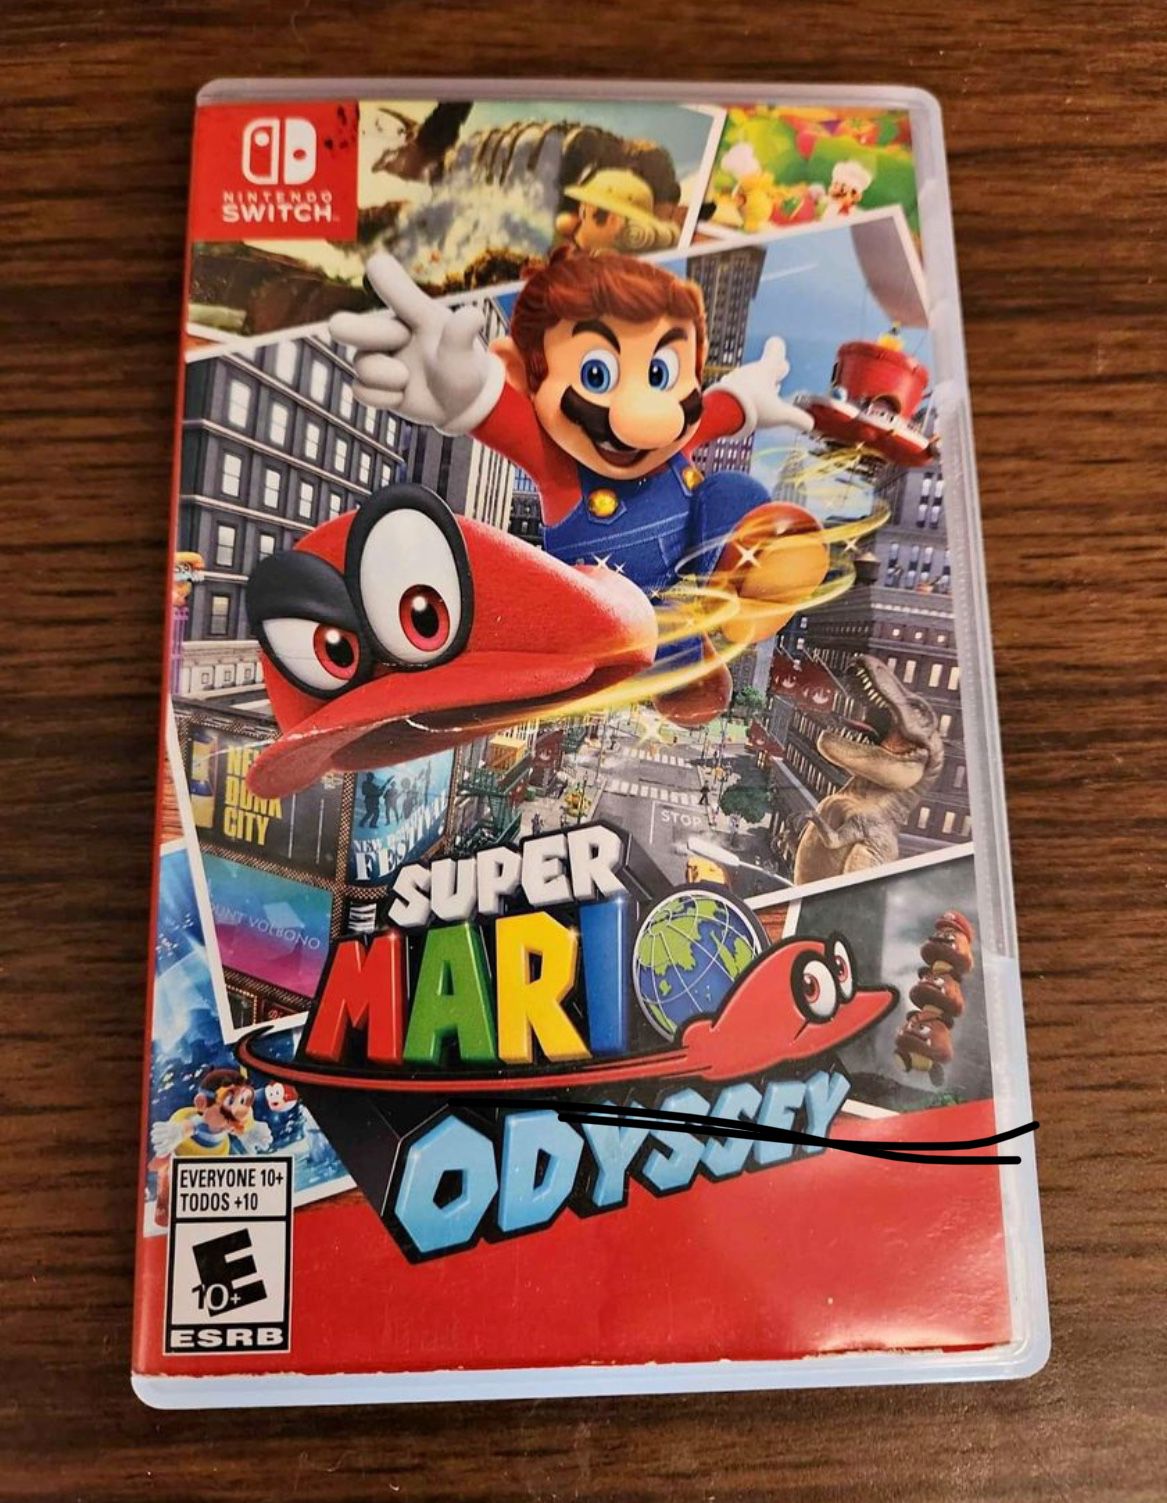 Super Mario Odyessety Game